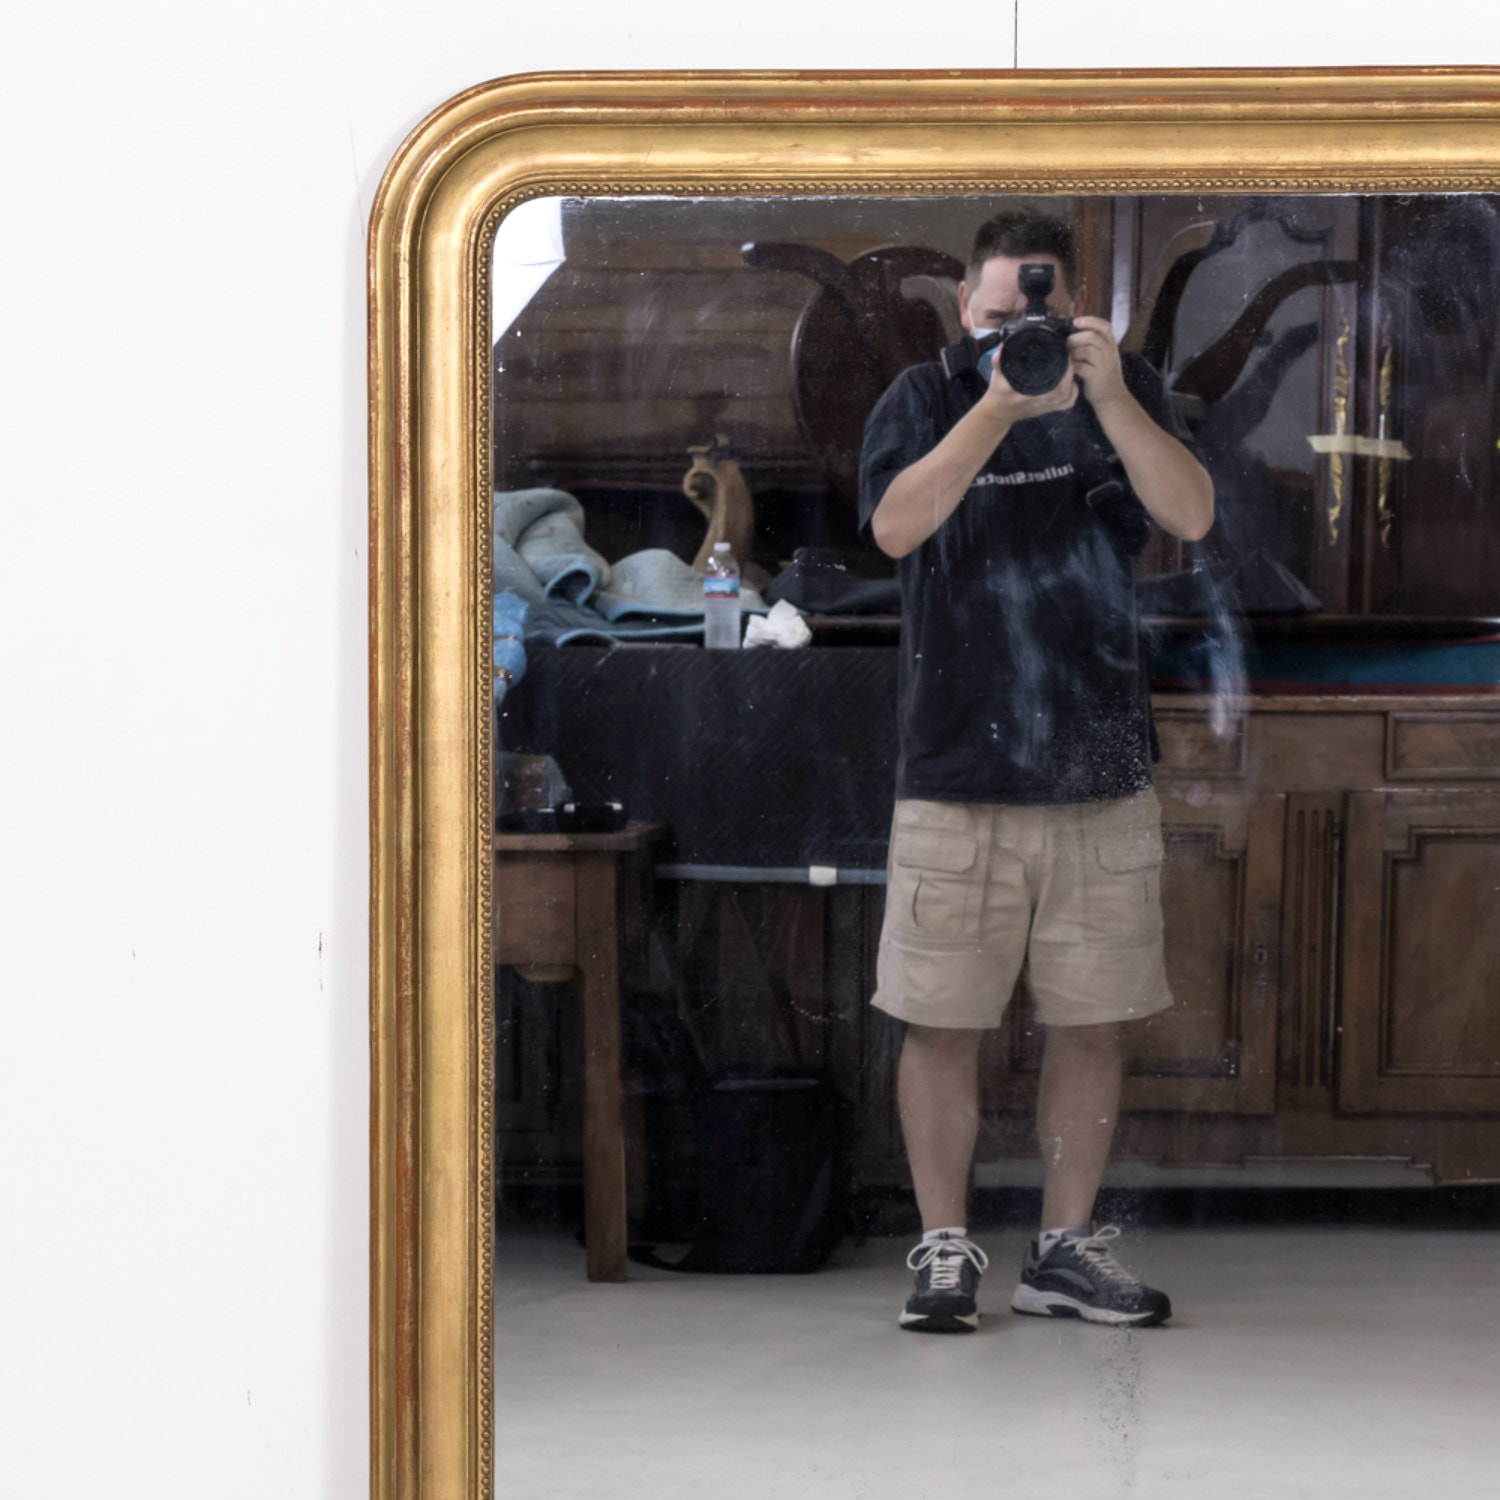 Louis Philippe Gilt Floor Mirror